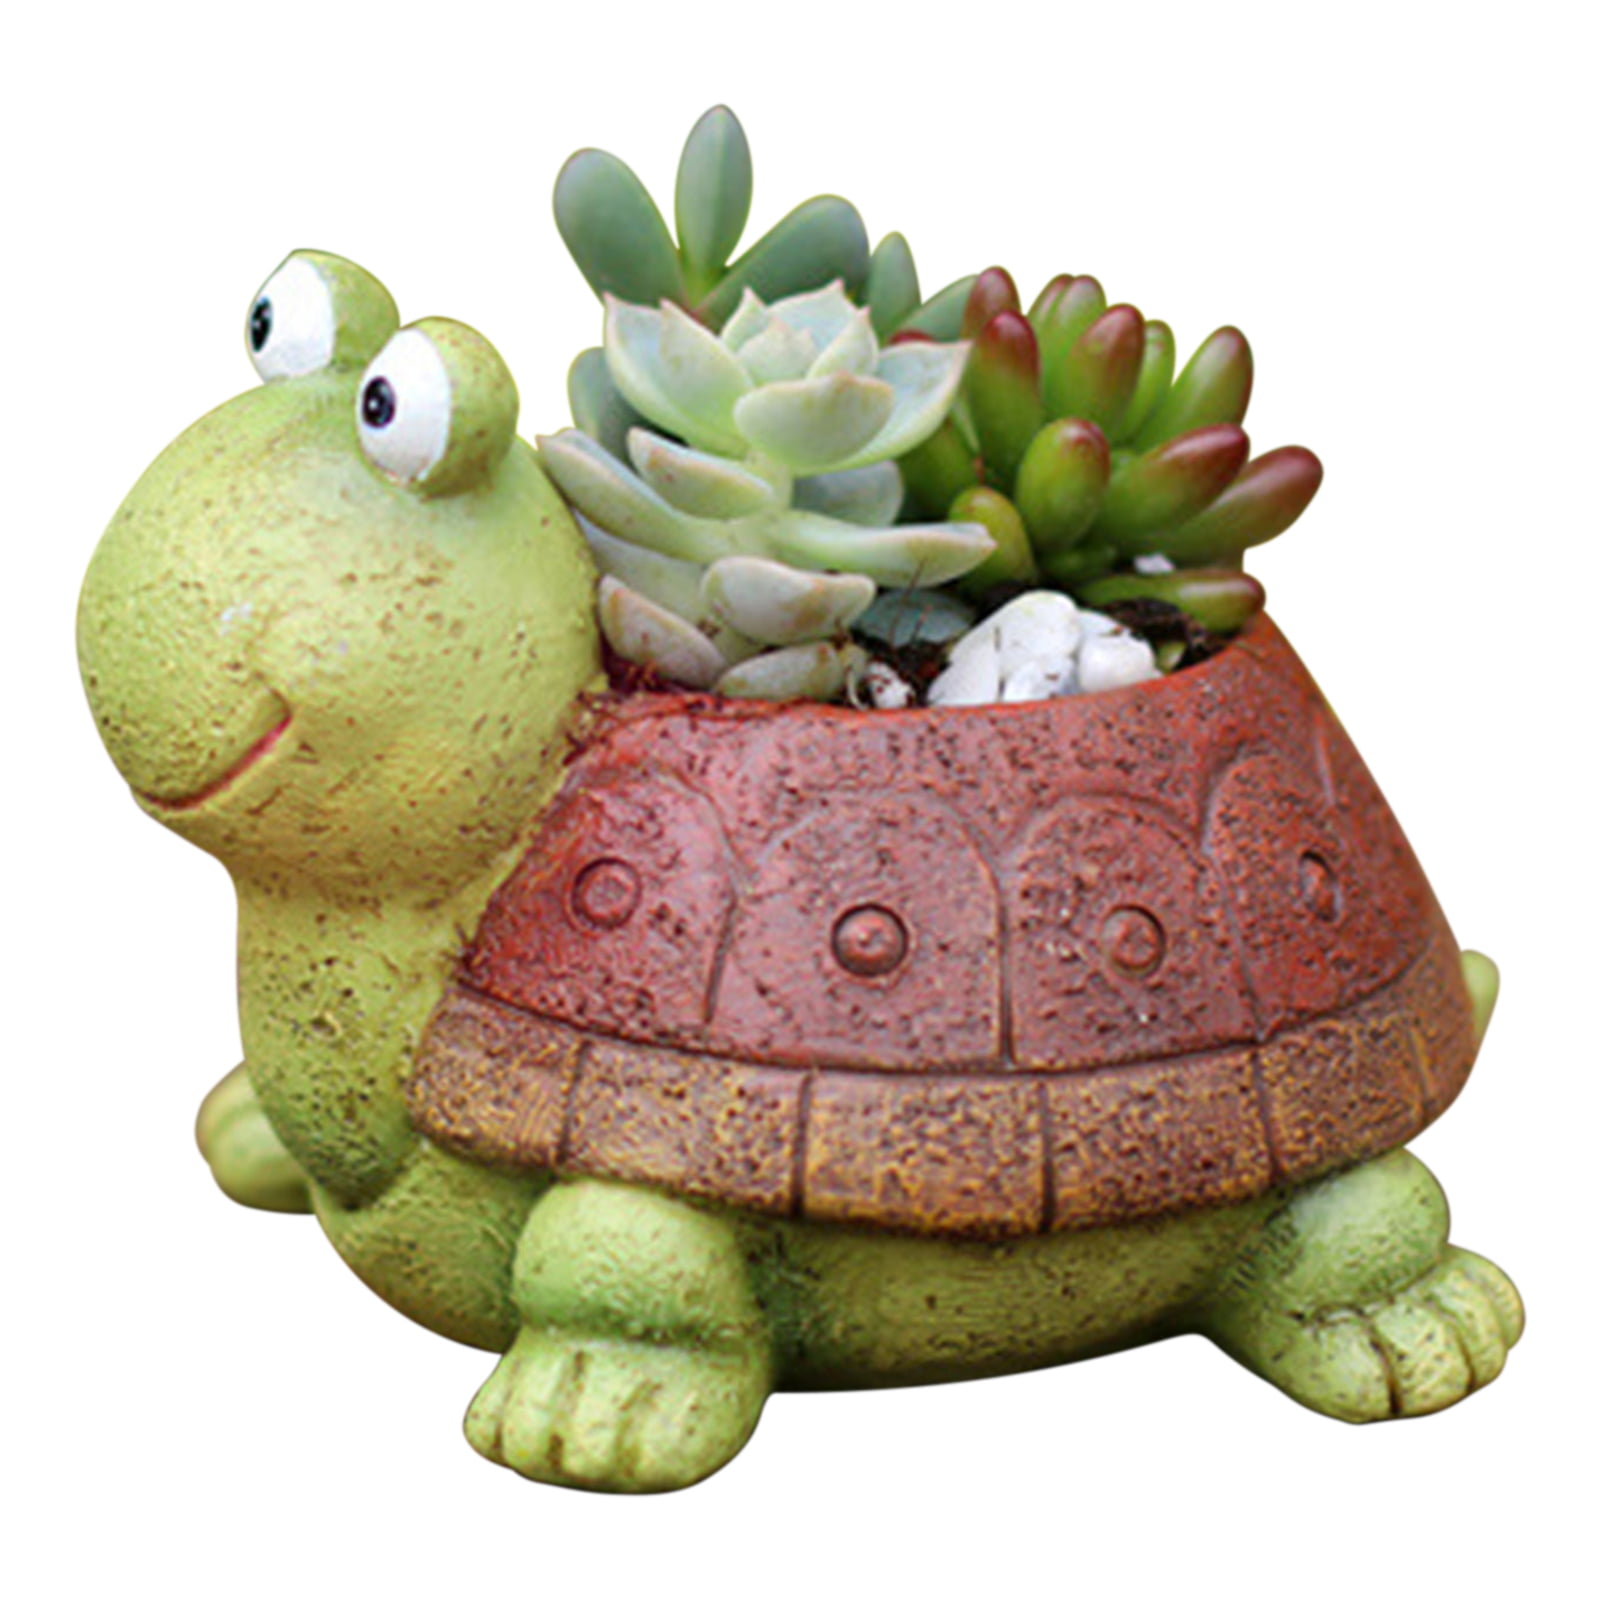 Small Ornaments Little Turtle Resin Crafts 2 Color Decor DIY Micro Landscape HC 